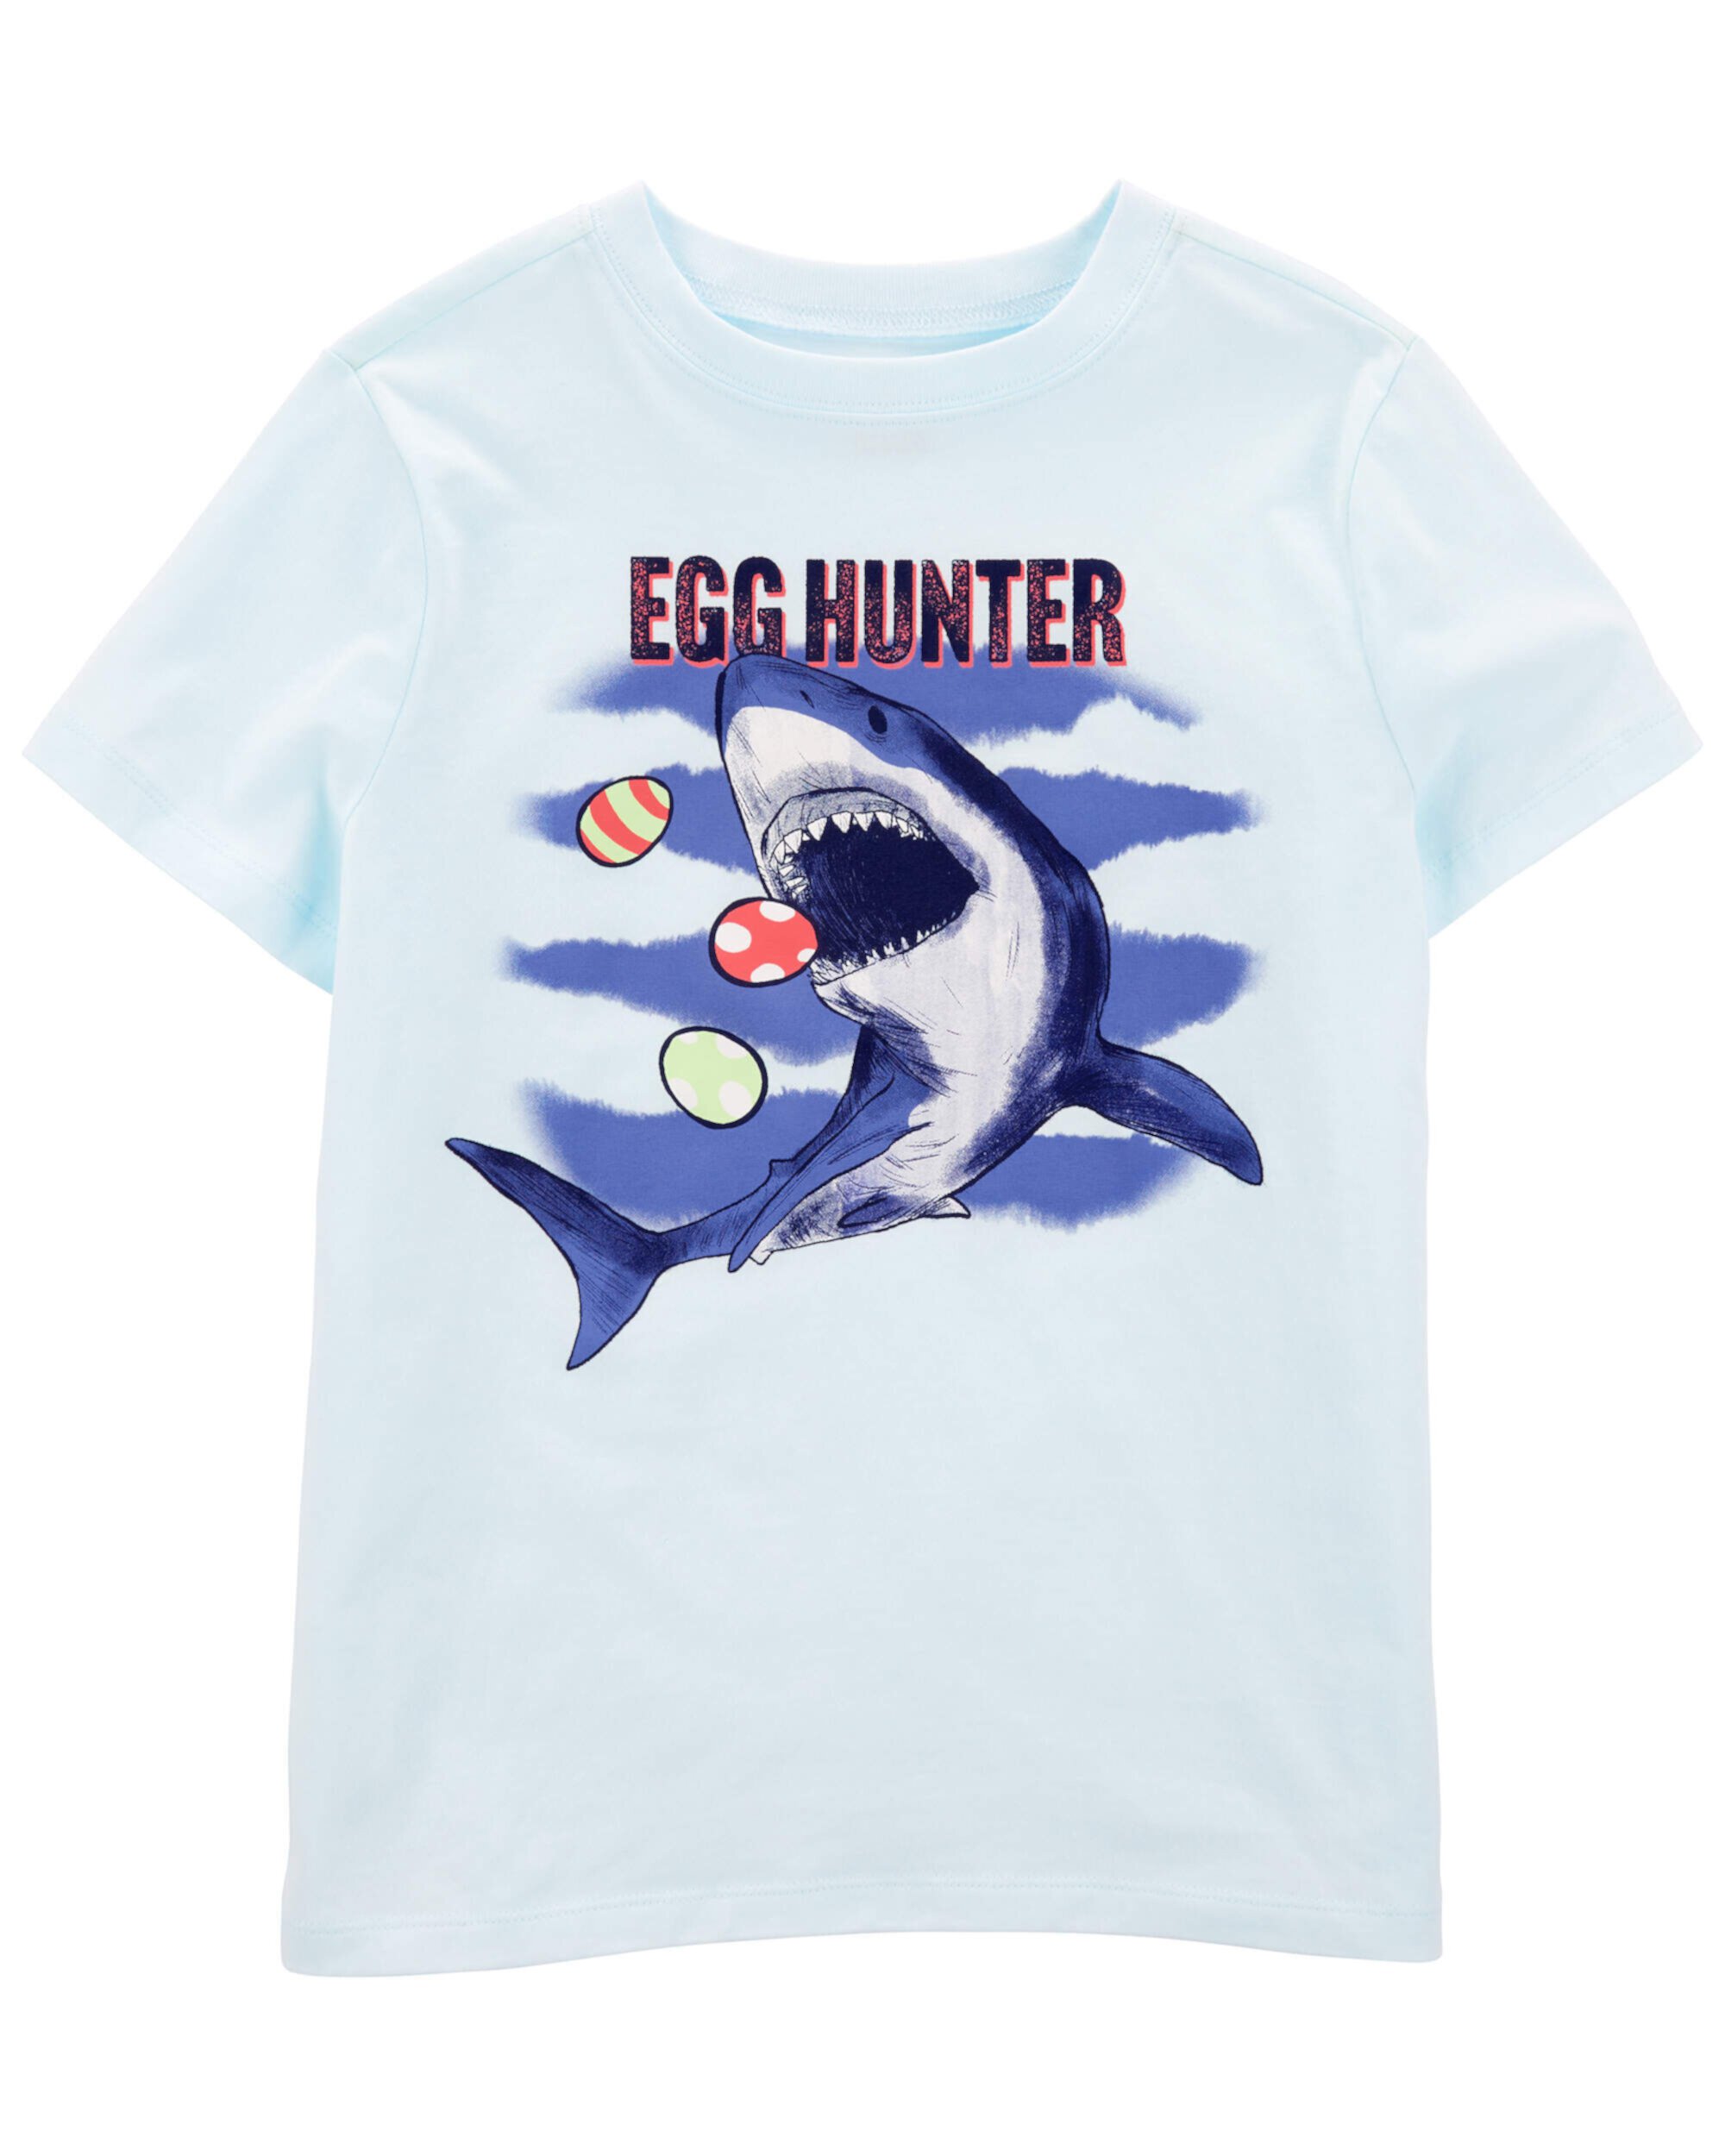 Футболка Kid Egg Hunter с рисунком акулы Carter's